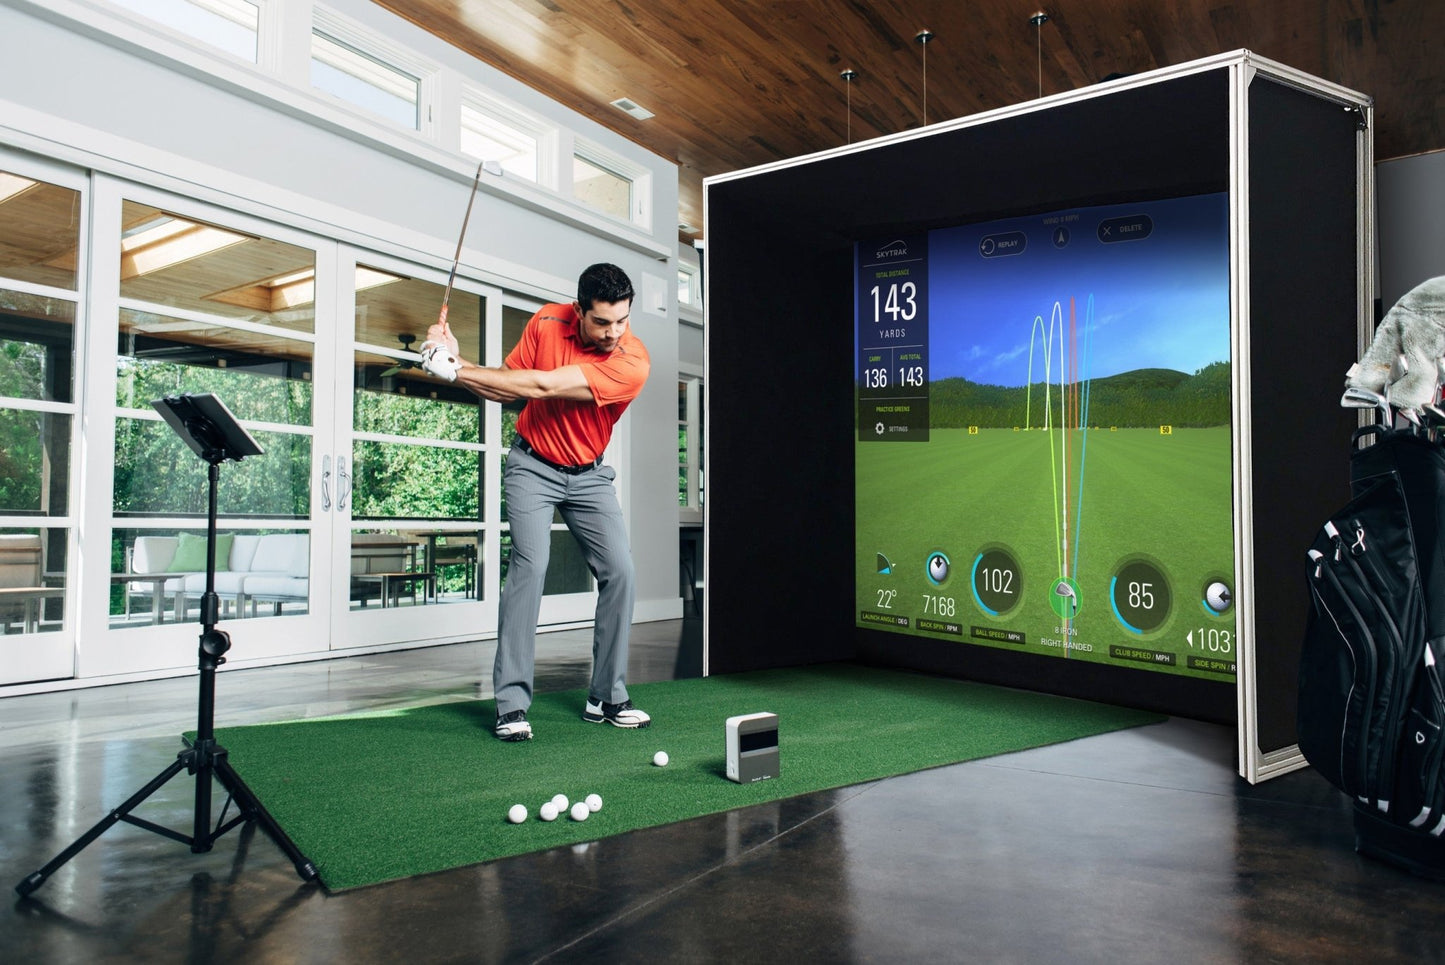 SkyTrak Golf - SkyTrak Launch Monitor & Simulator - Big Horn Golfer